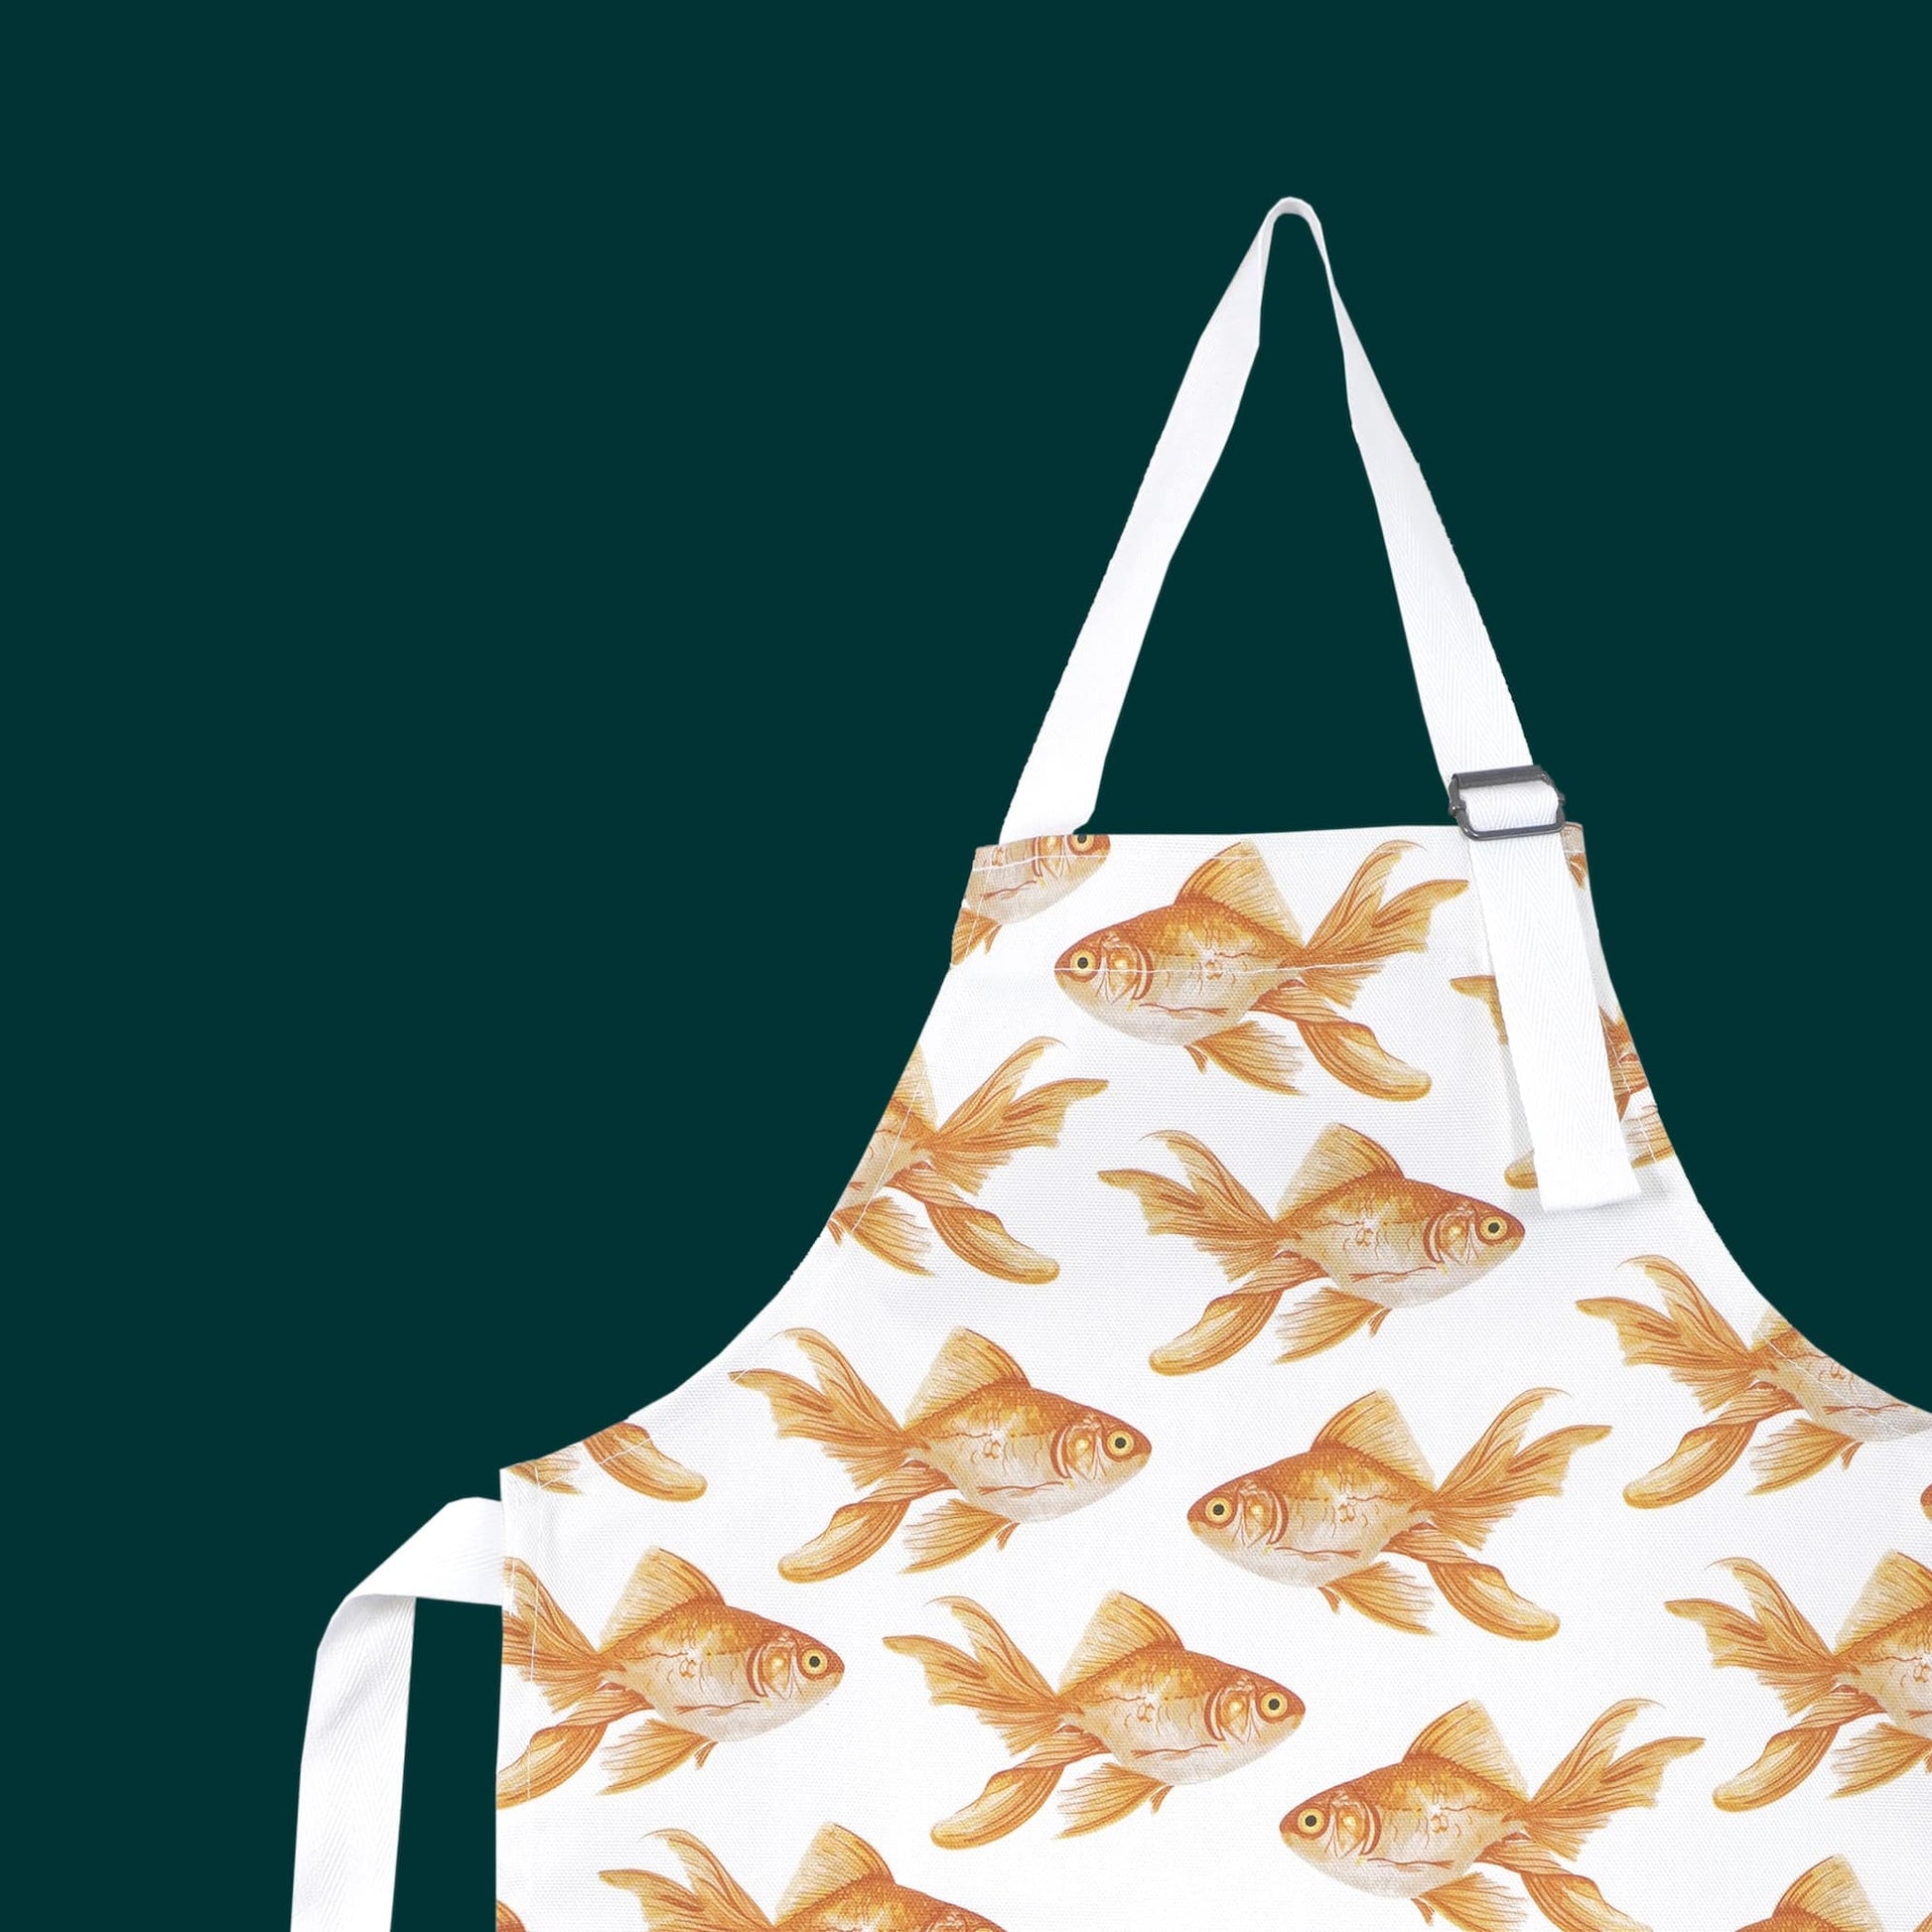 Kid's apron featuring goldfish